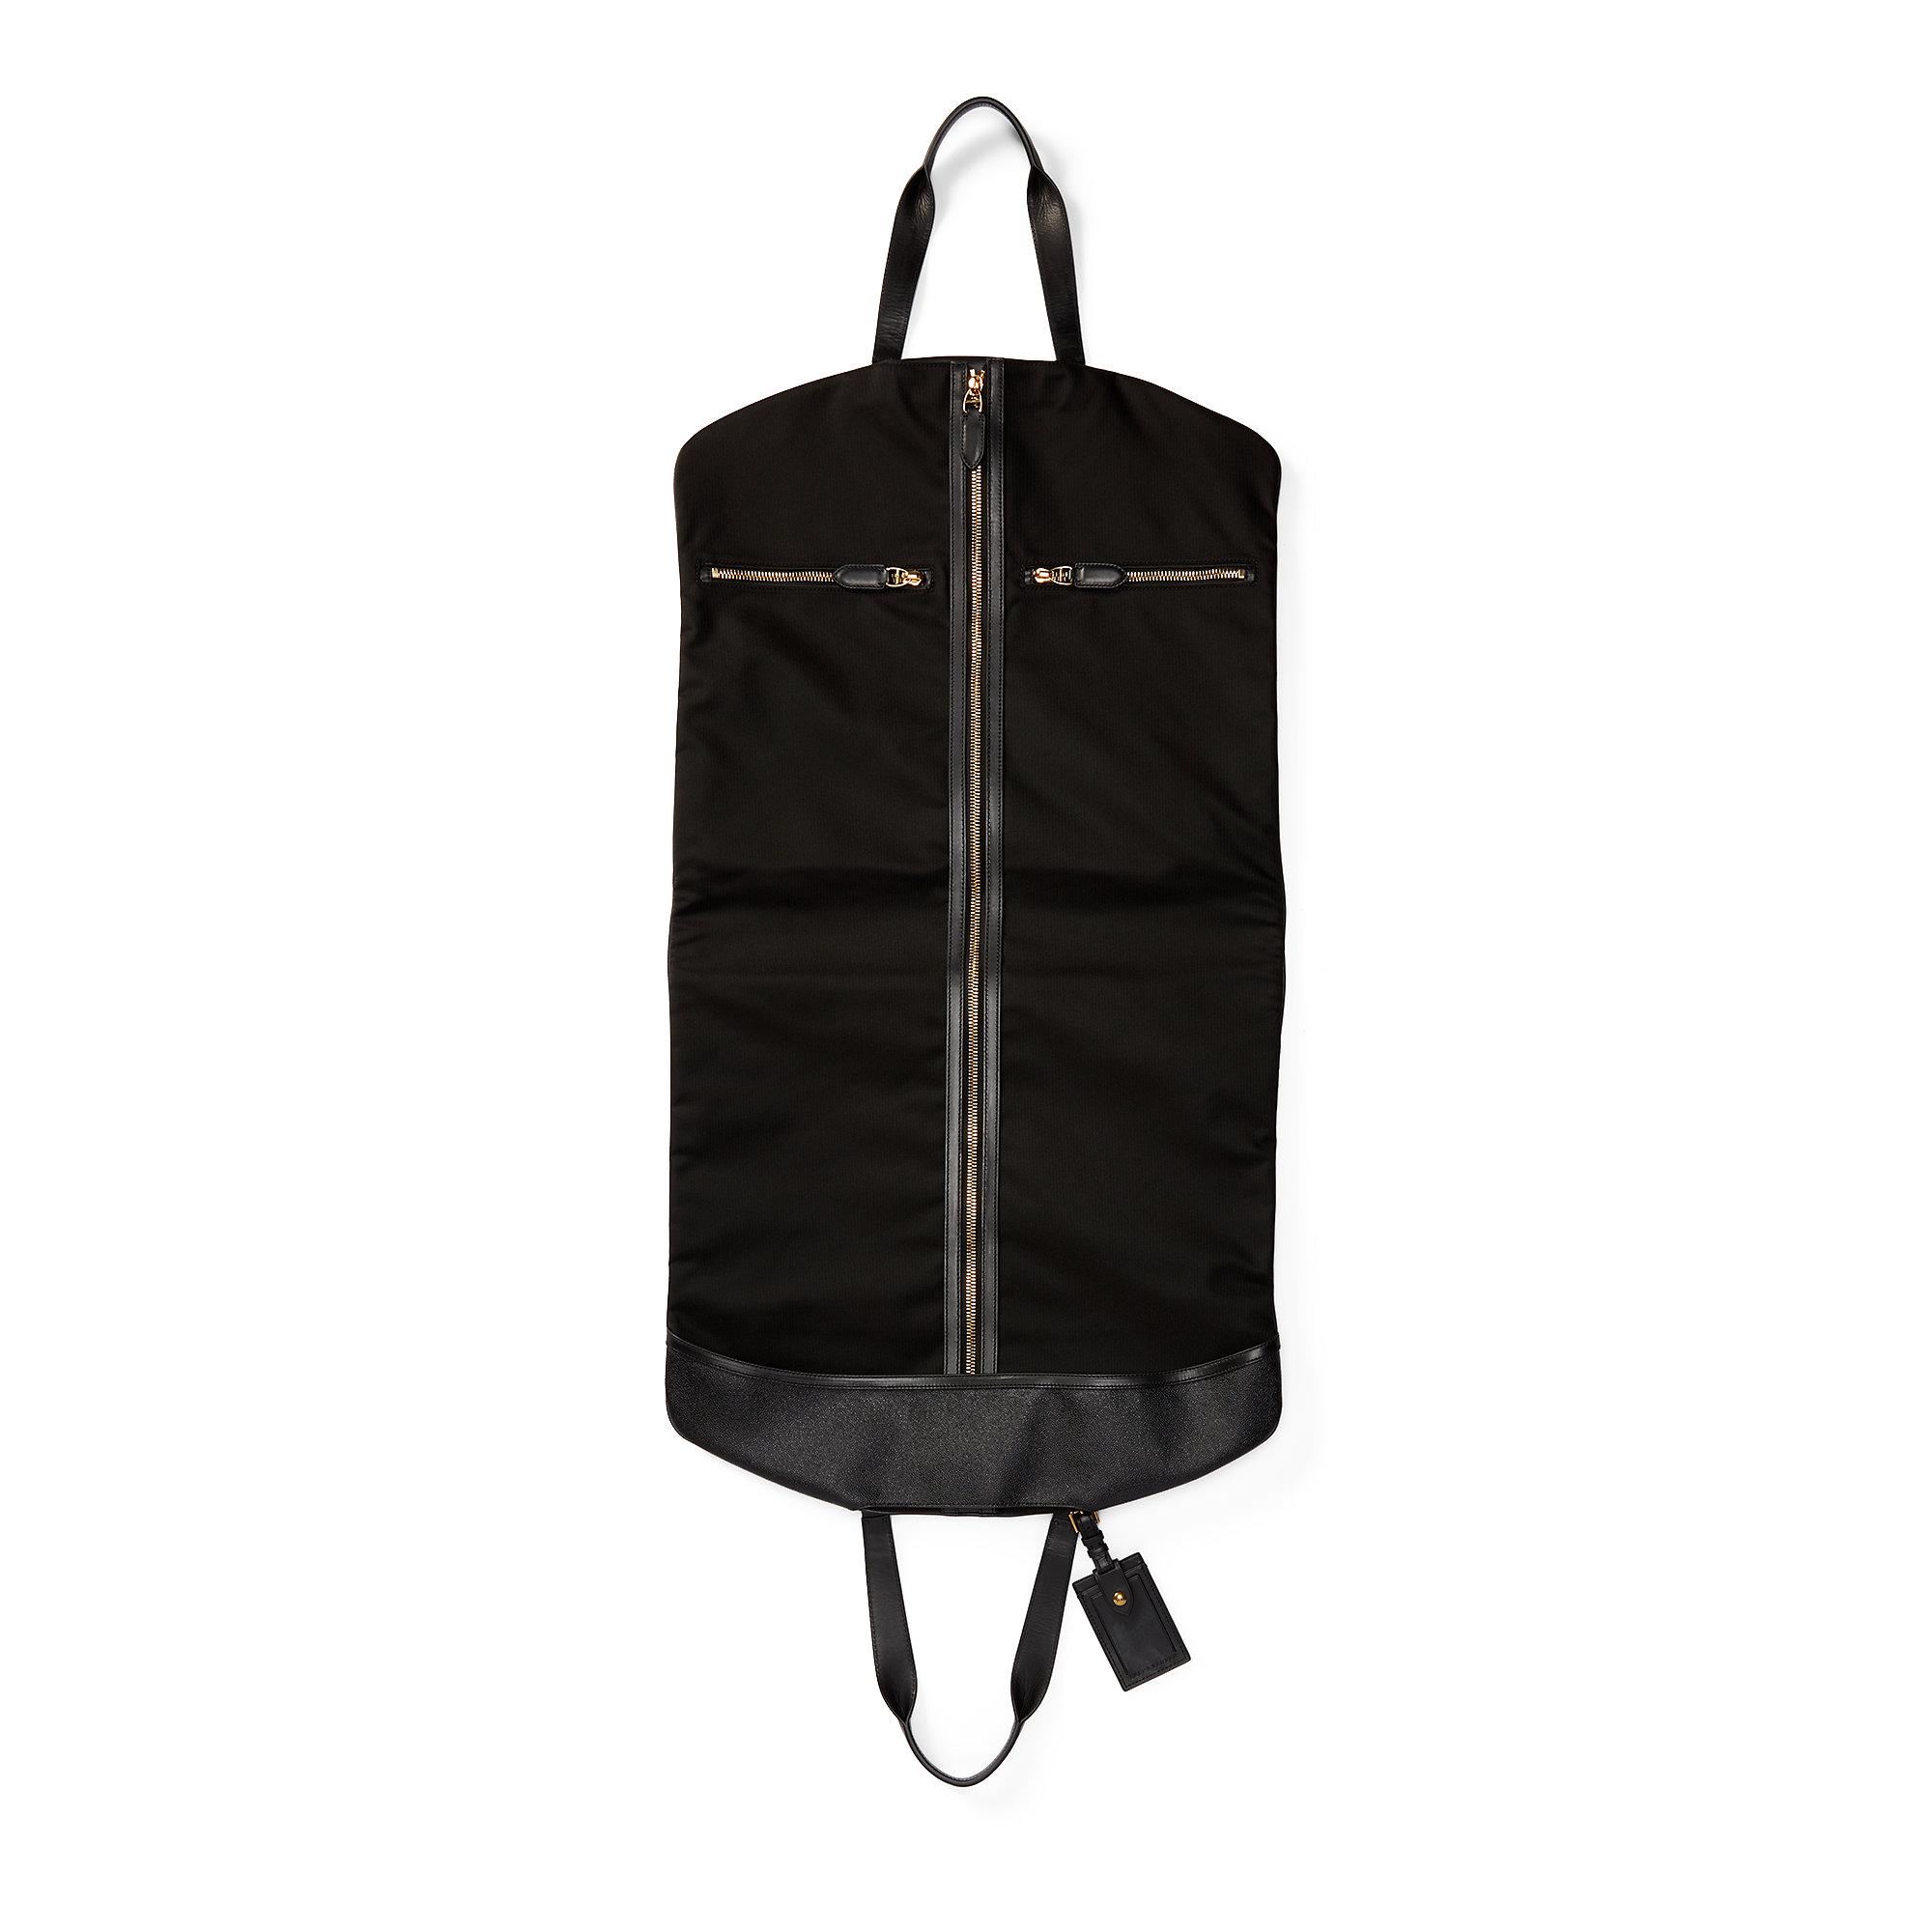 Ralph Lauren Coated Canvas Rl Garment Bag in Black for Men - Lyst